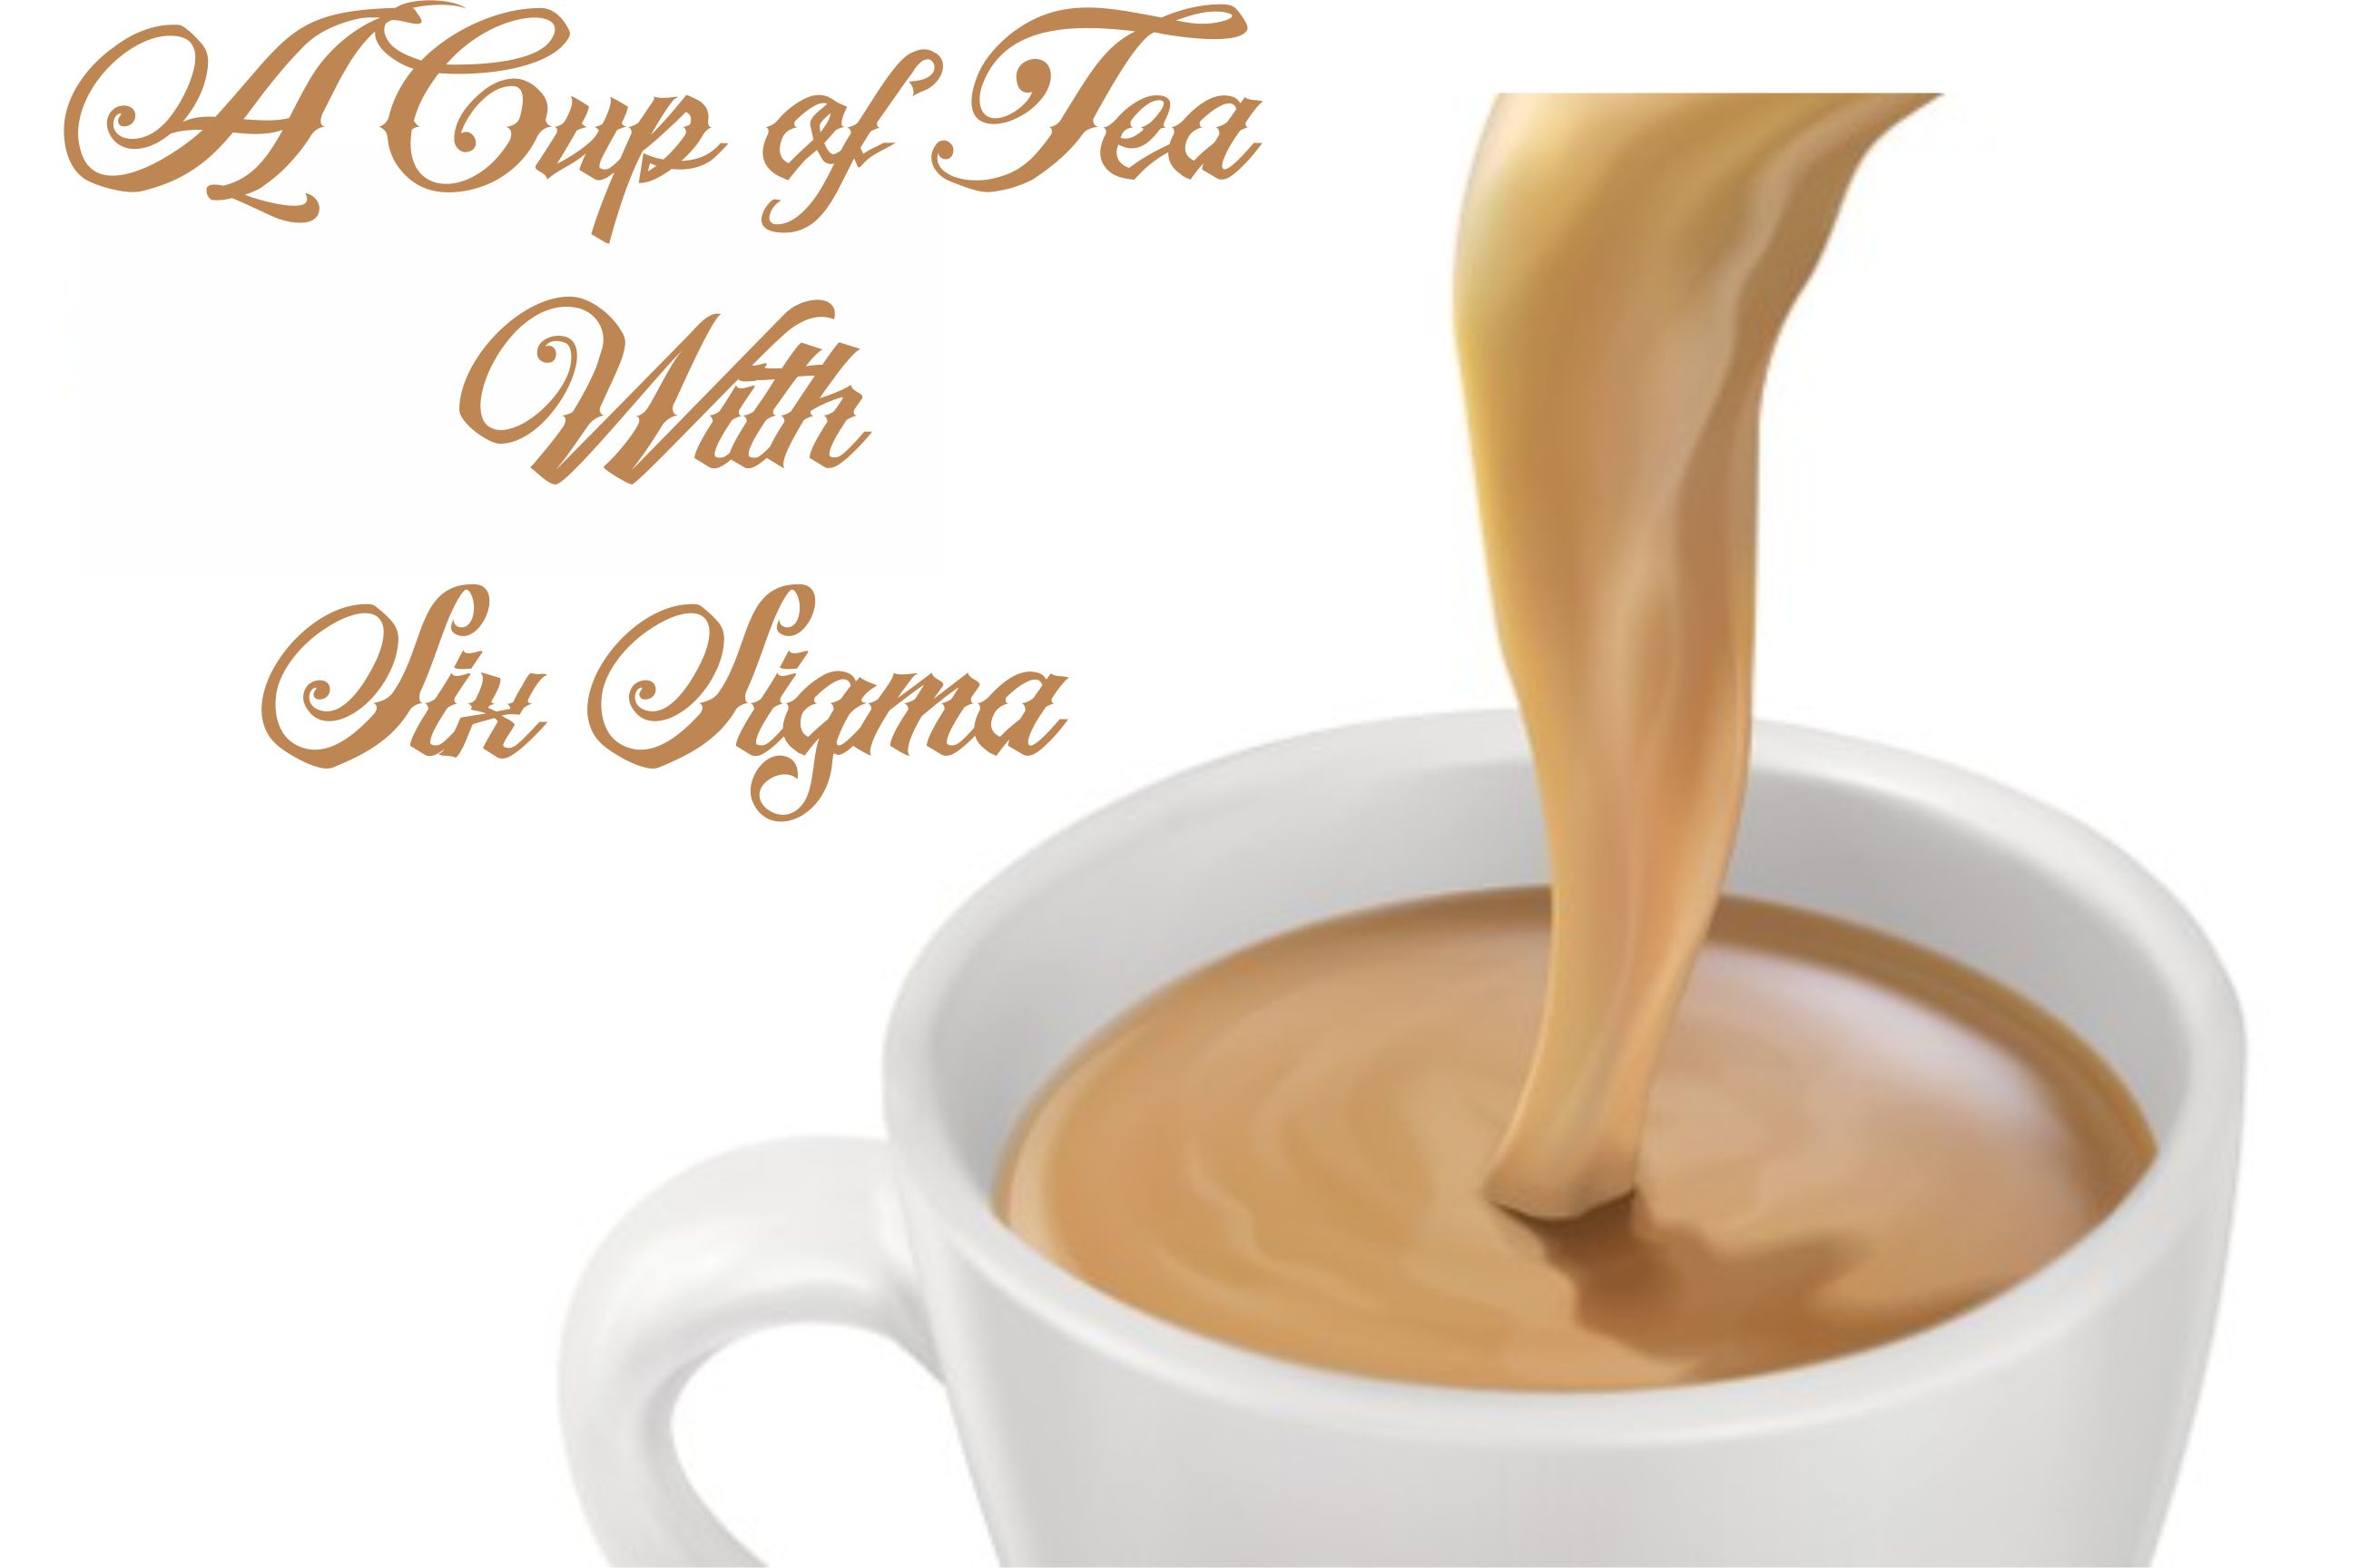 A Cup of Tea With Six Sigma - NIQC International, Bangalore